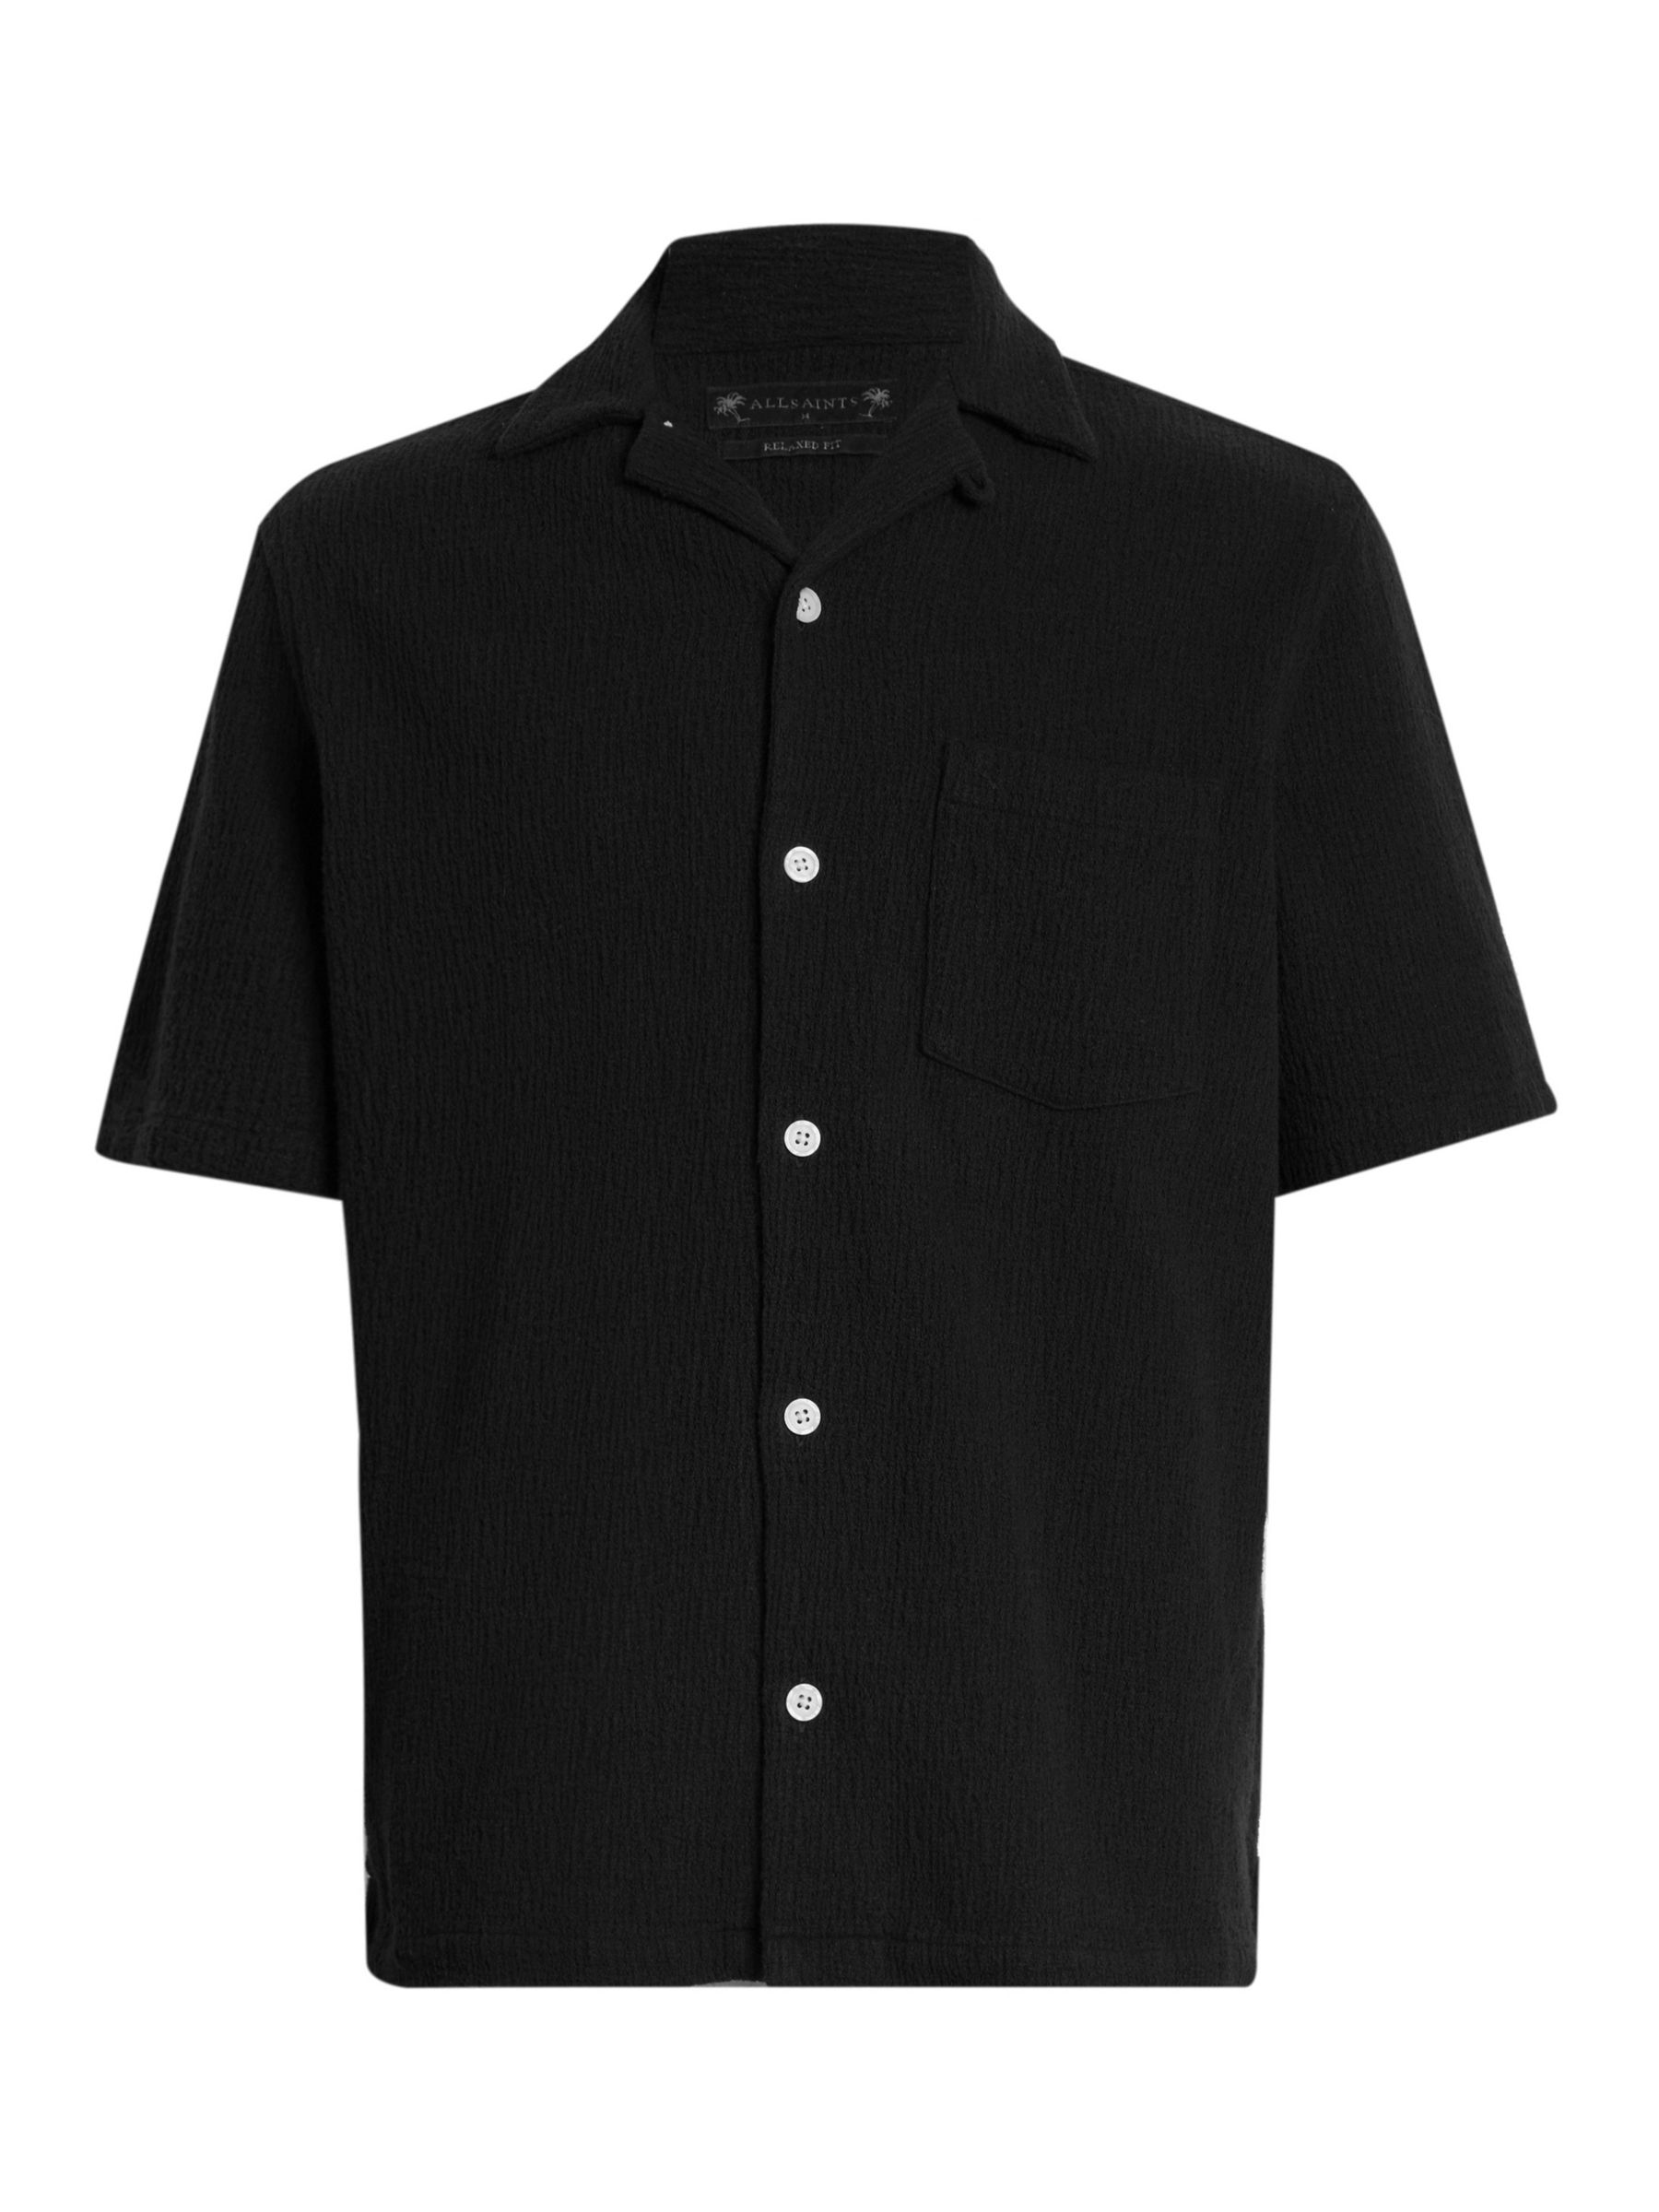 AllSaints Eularia Short Sleeve Shirt, Jet Black at John Lewis & Partners